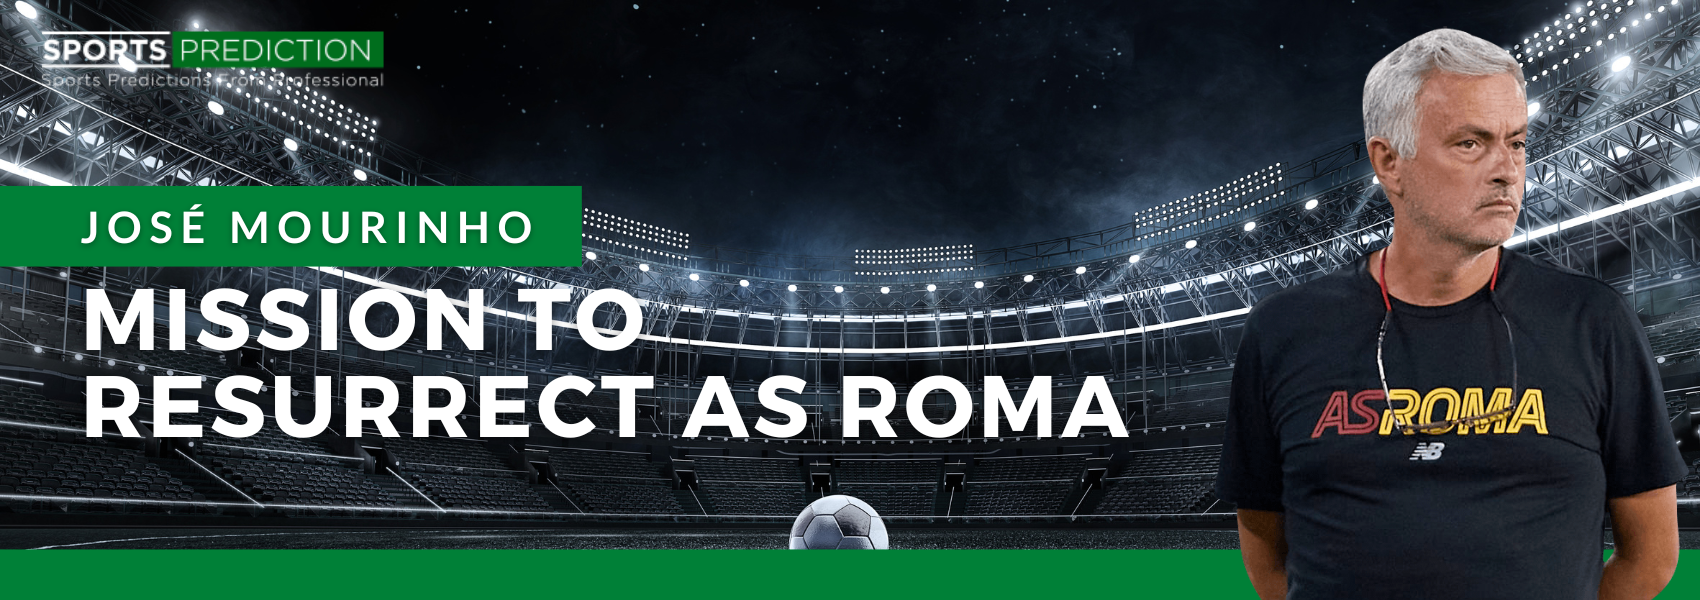 José Mourinho Has a Mission: To Resurrect AS Roma